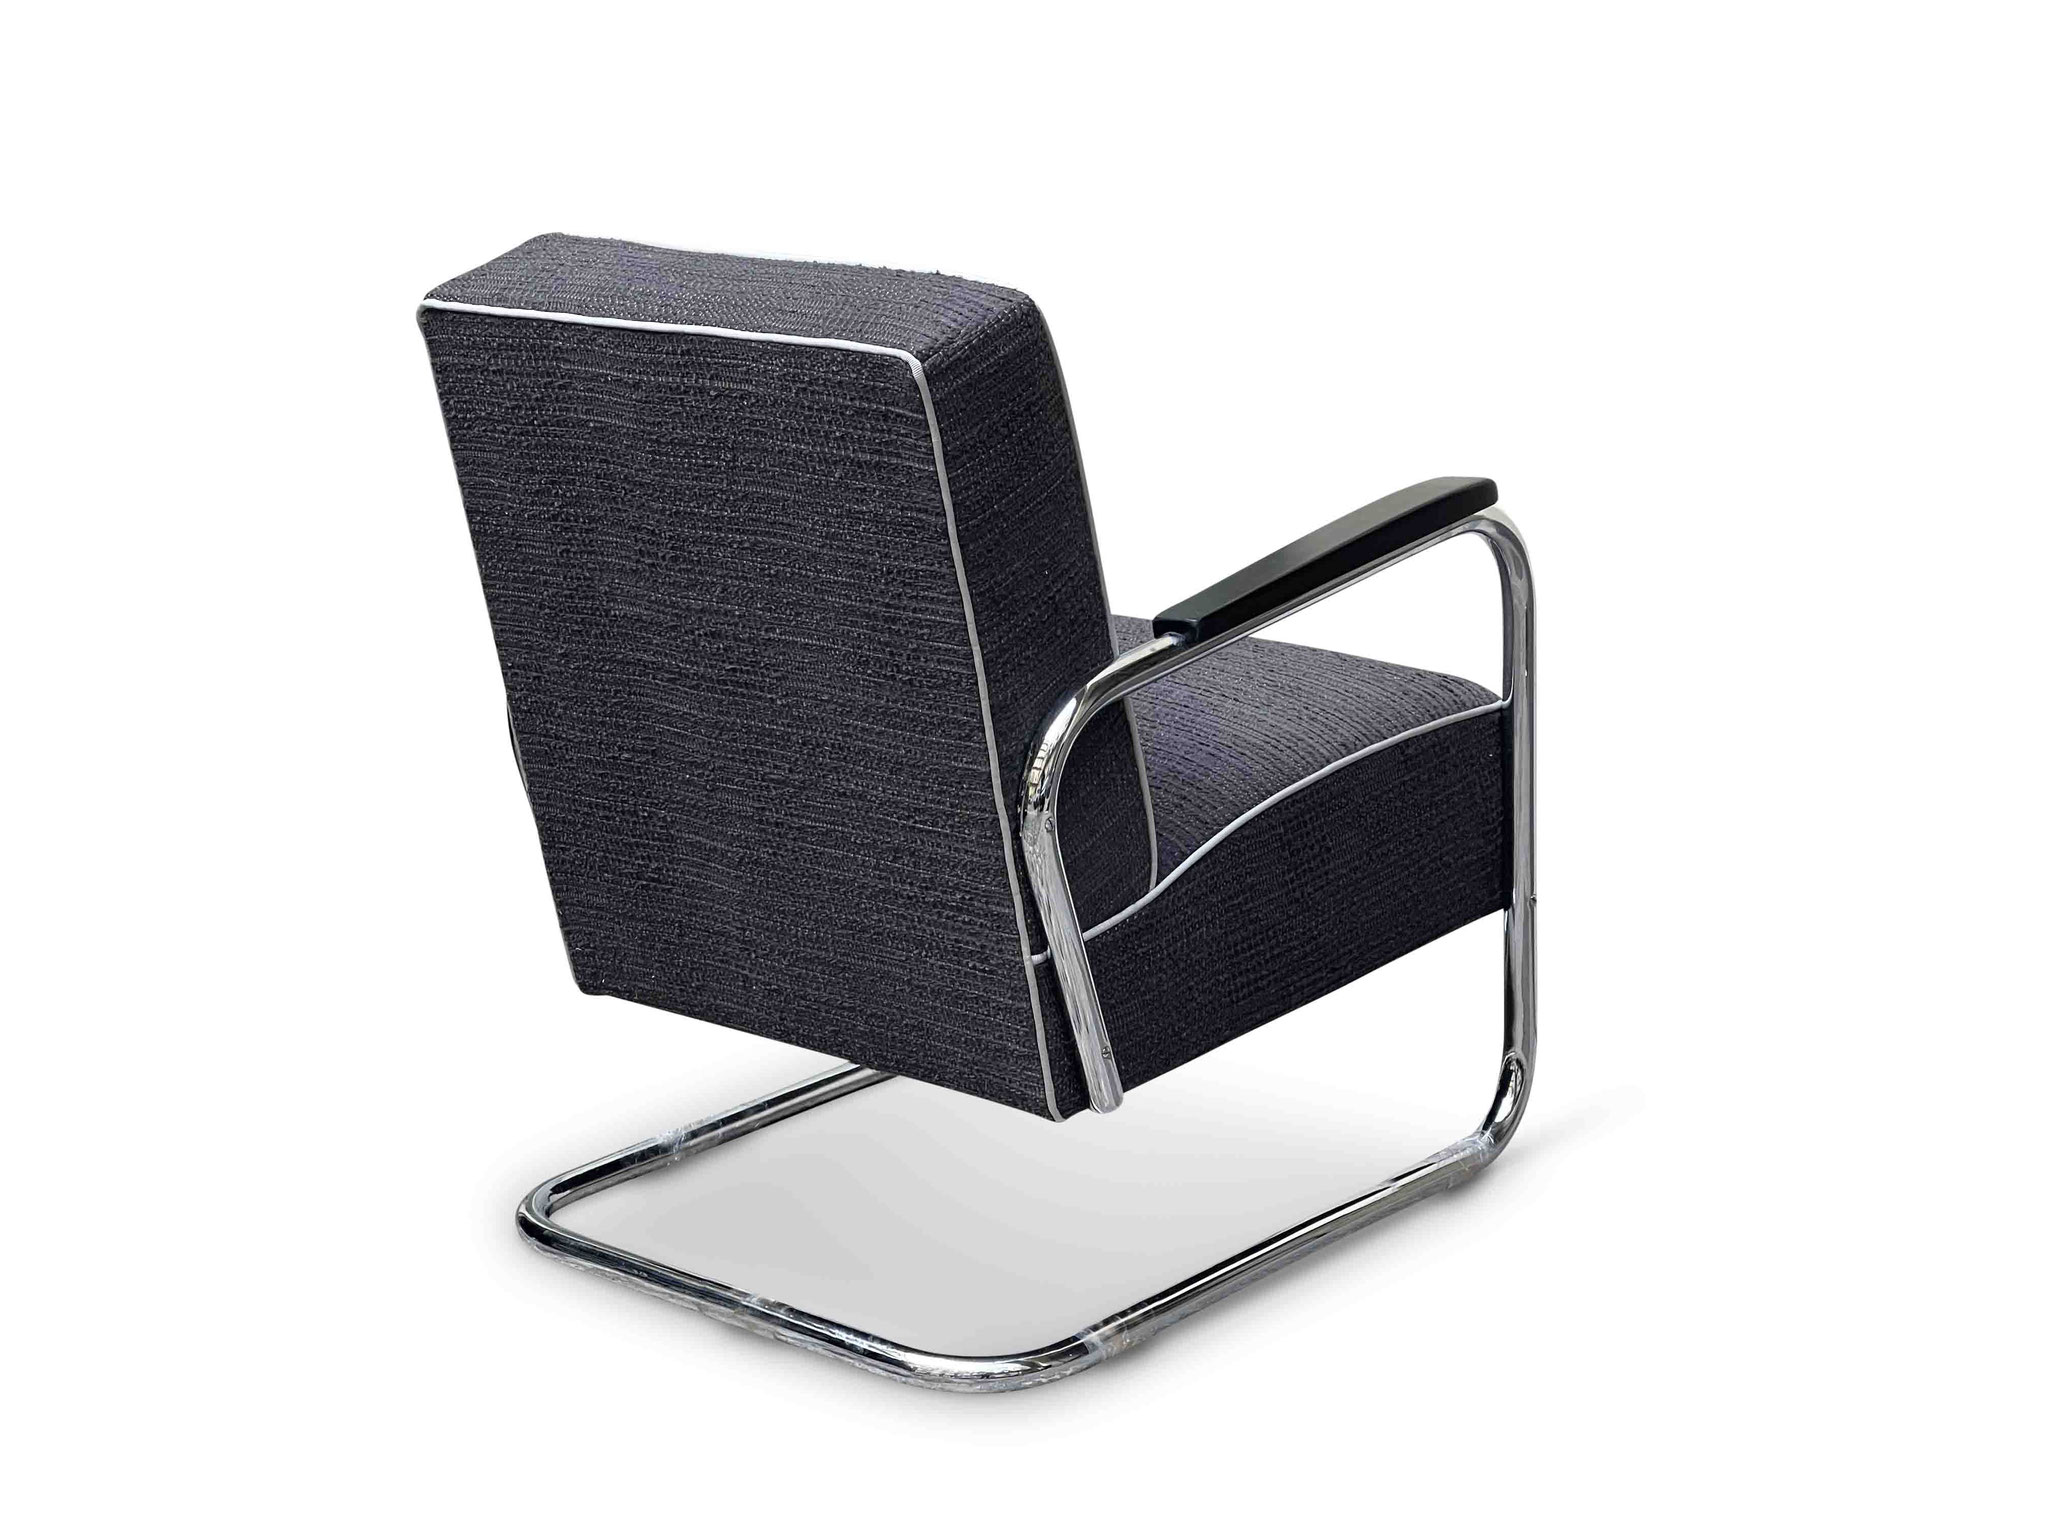 Bauhaus chrome chair new york